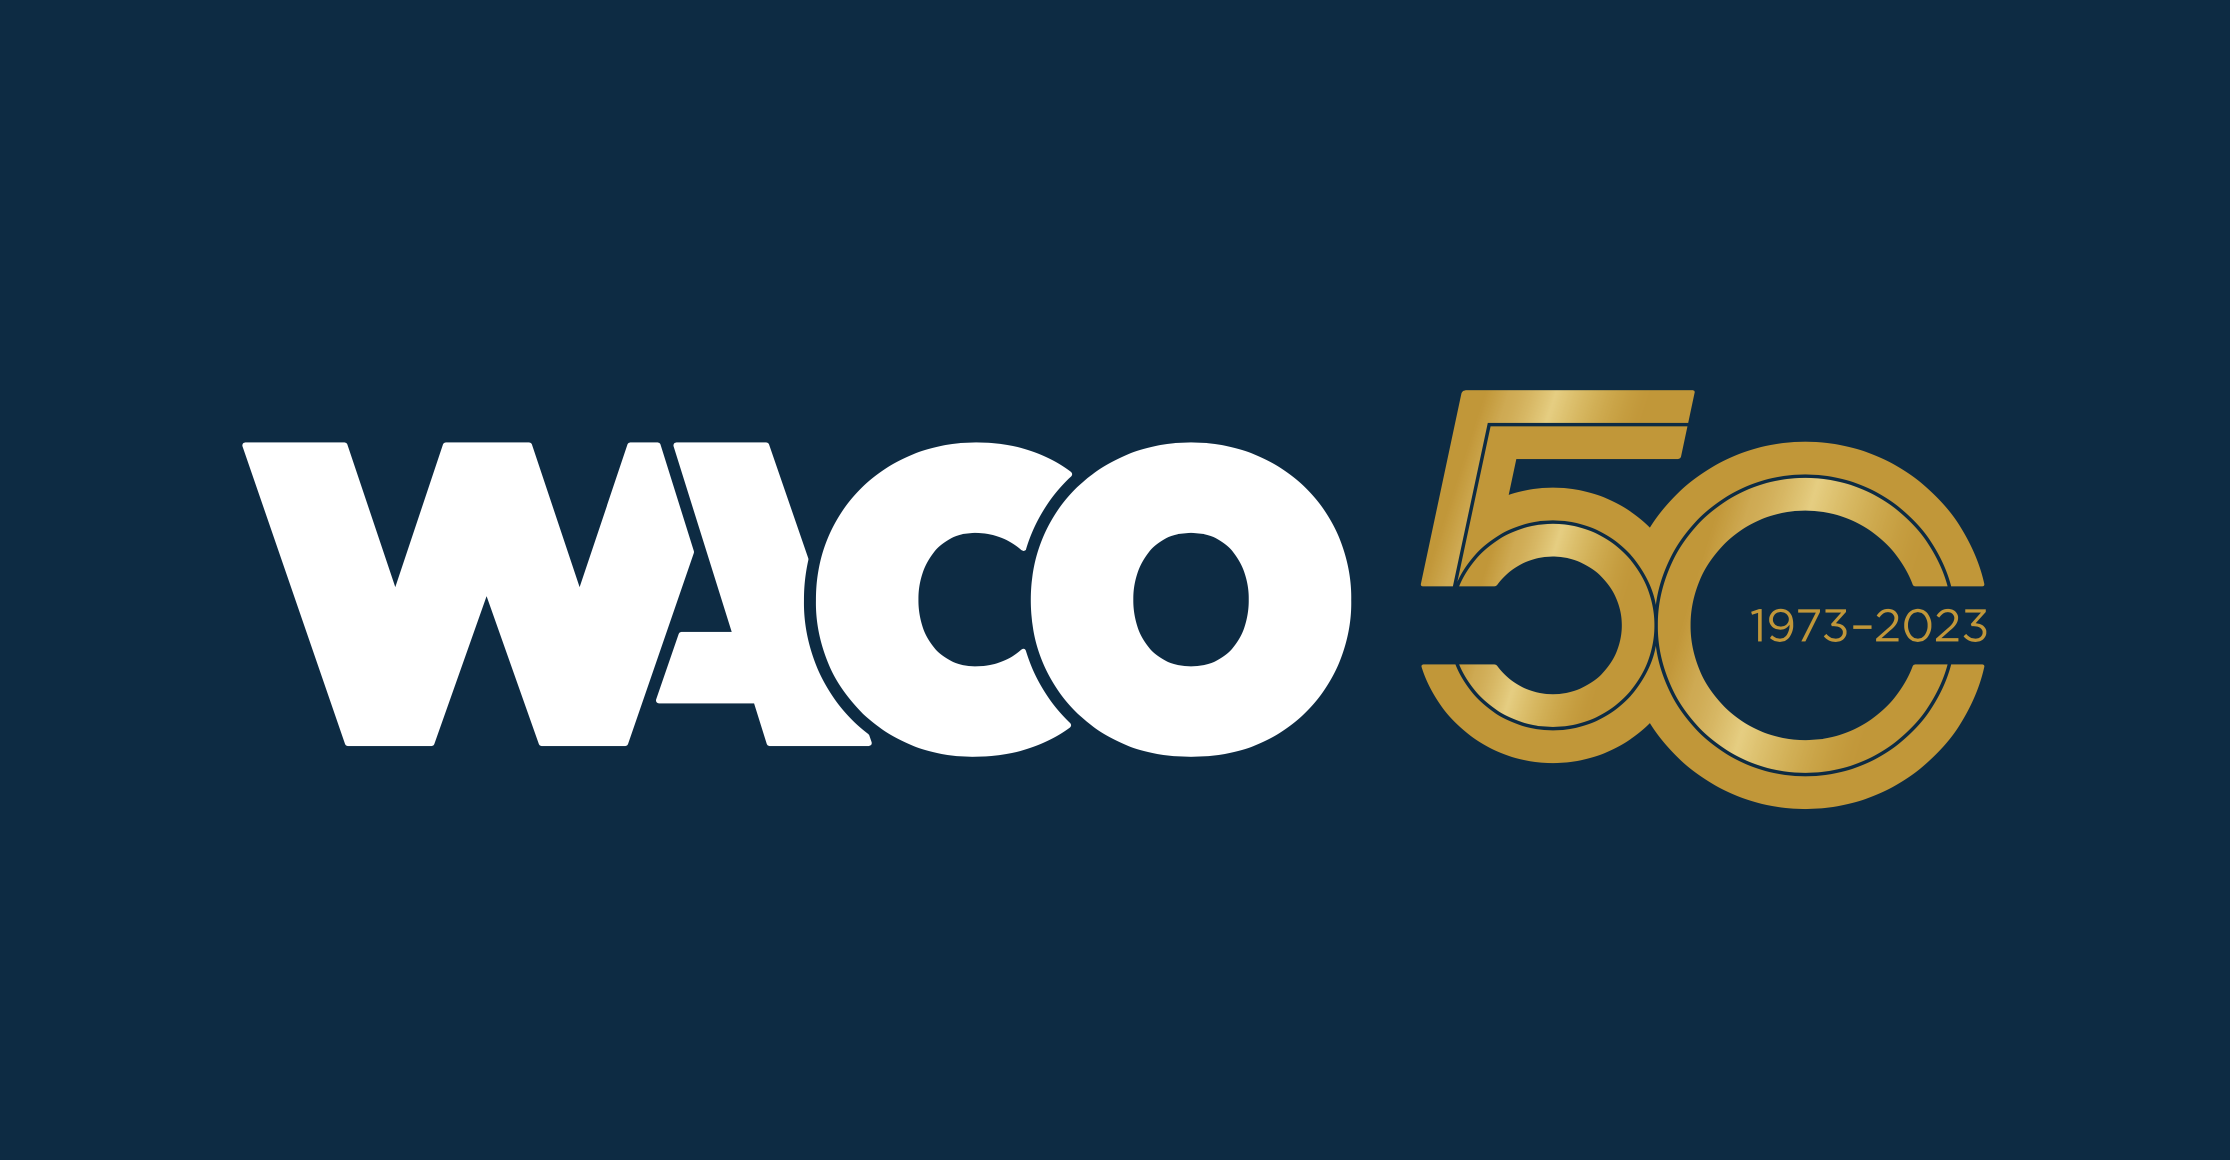 WACO’s 50th Anniversary